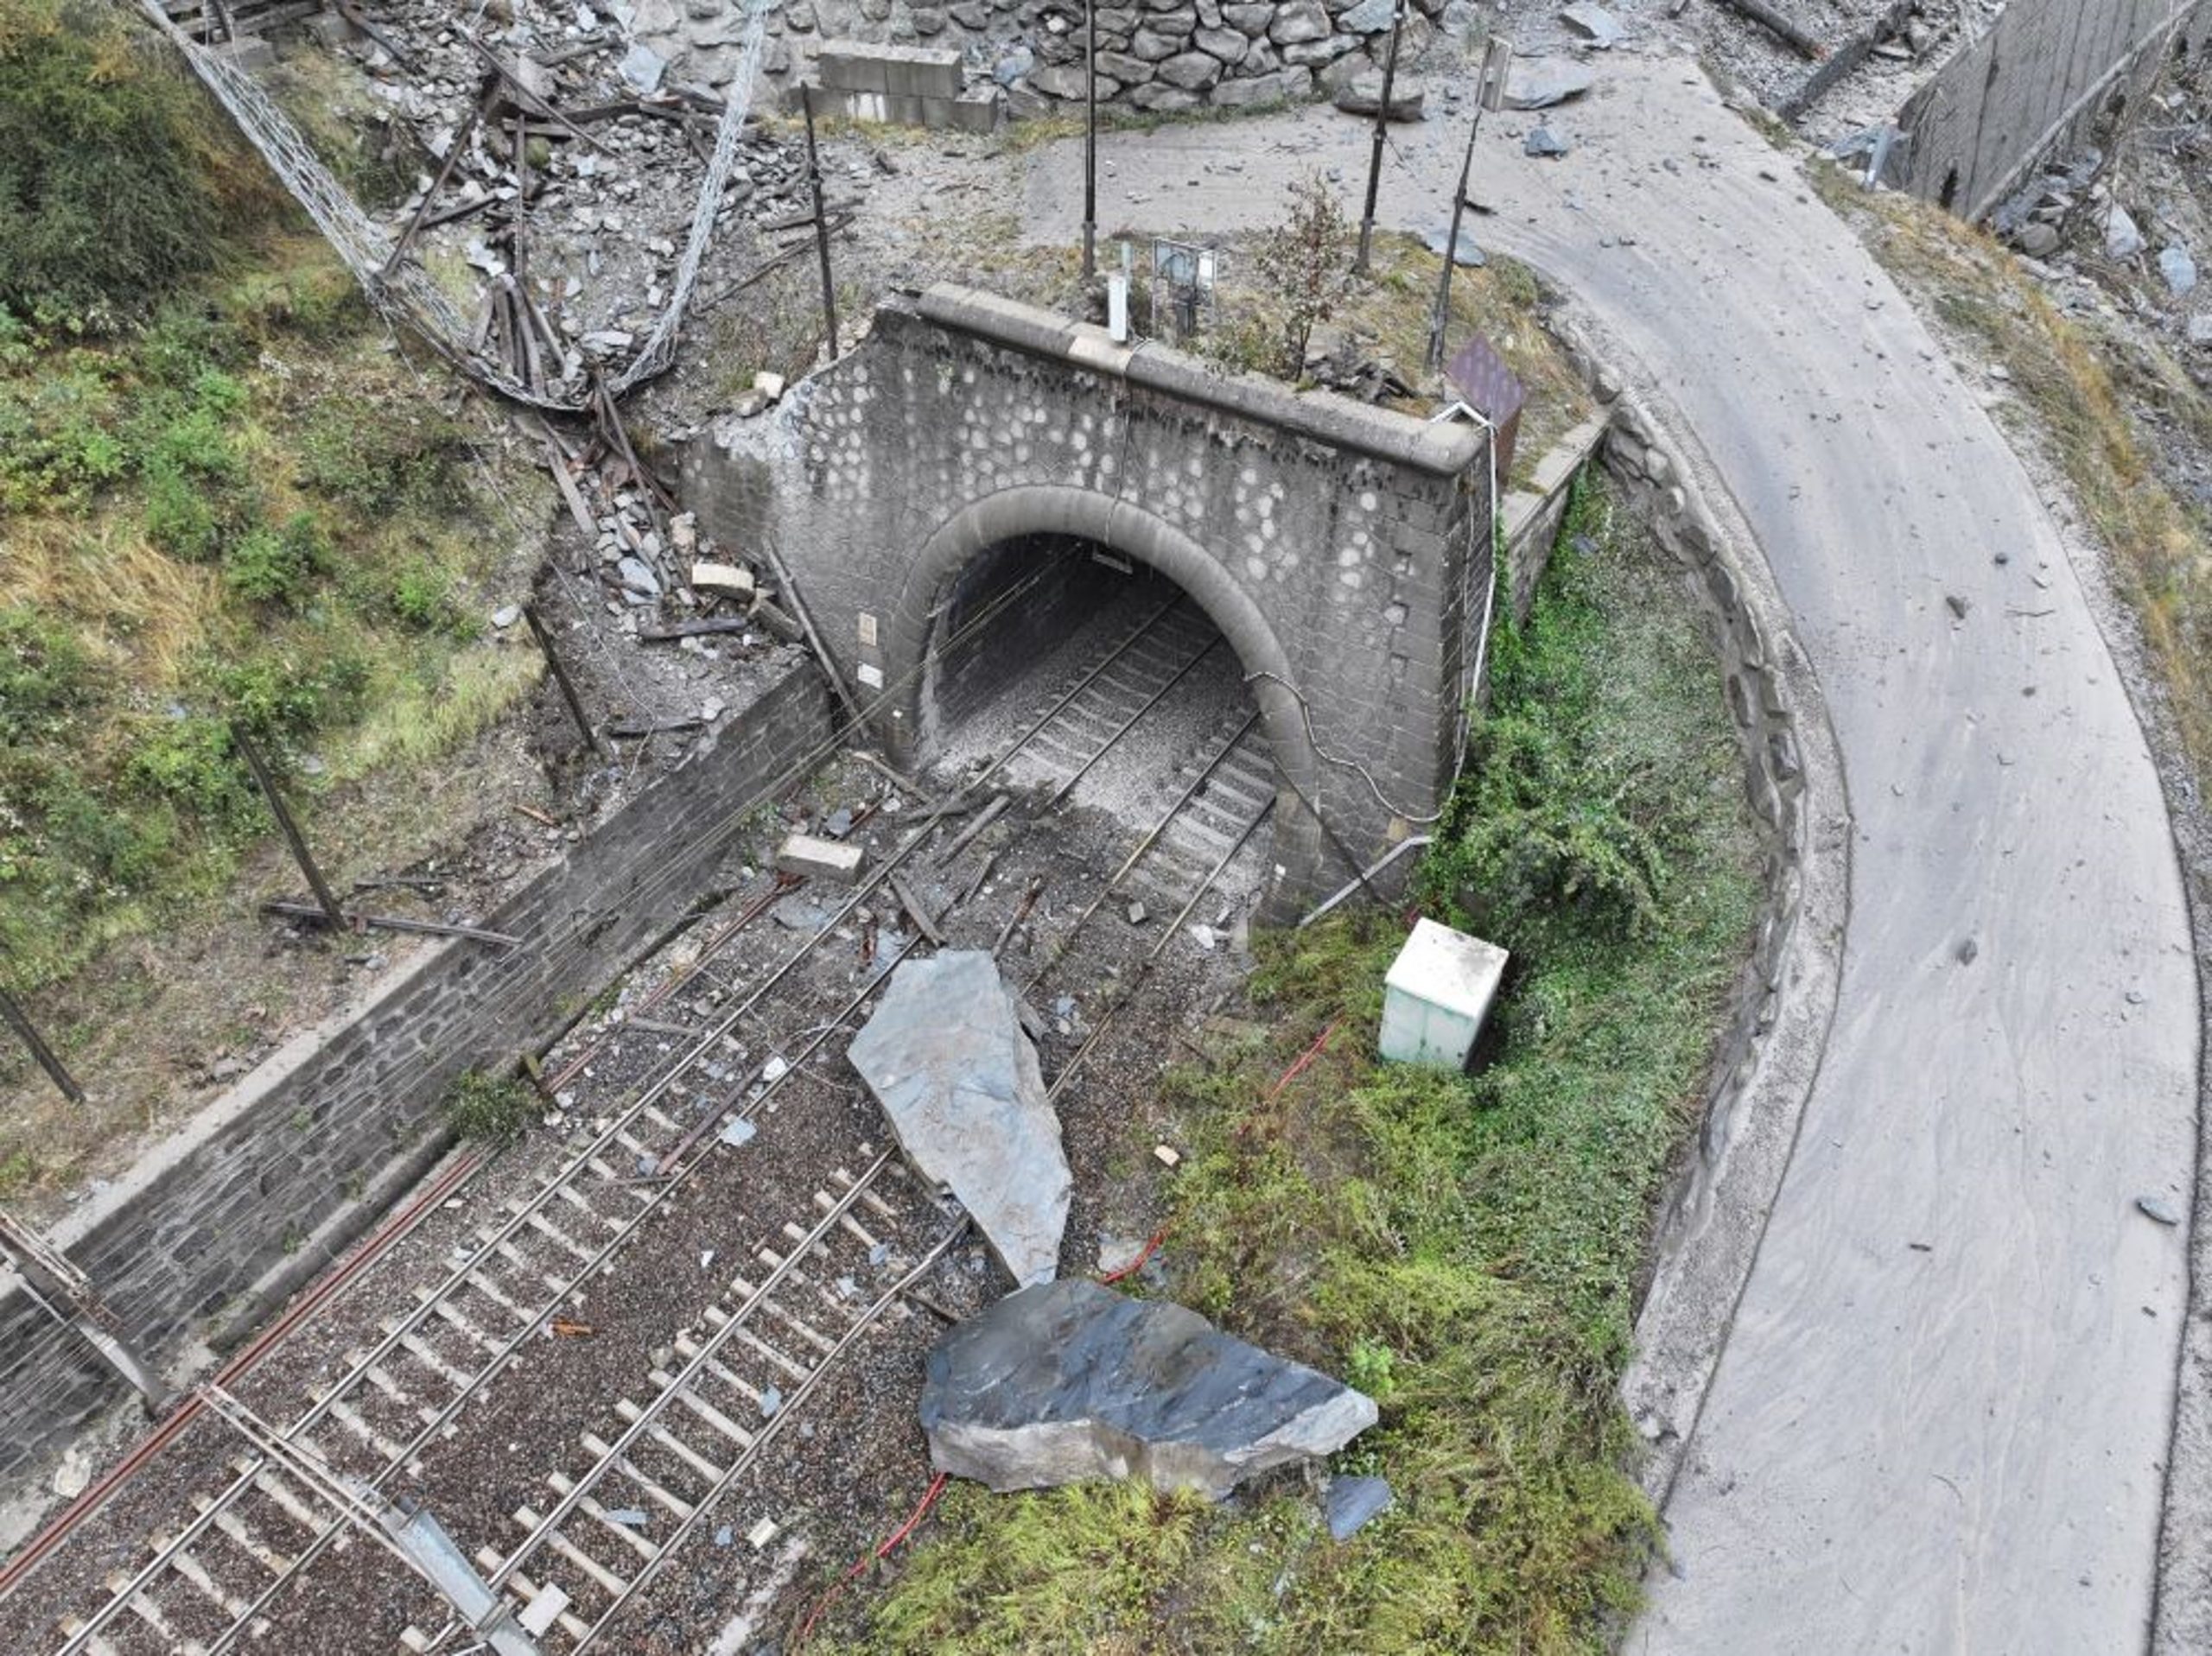 Drone shot showing debris still blocking the Fréjus railway tunnel